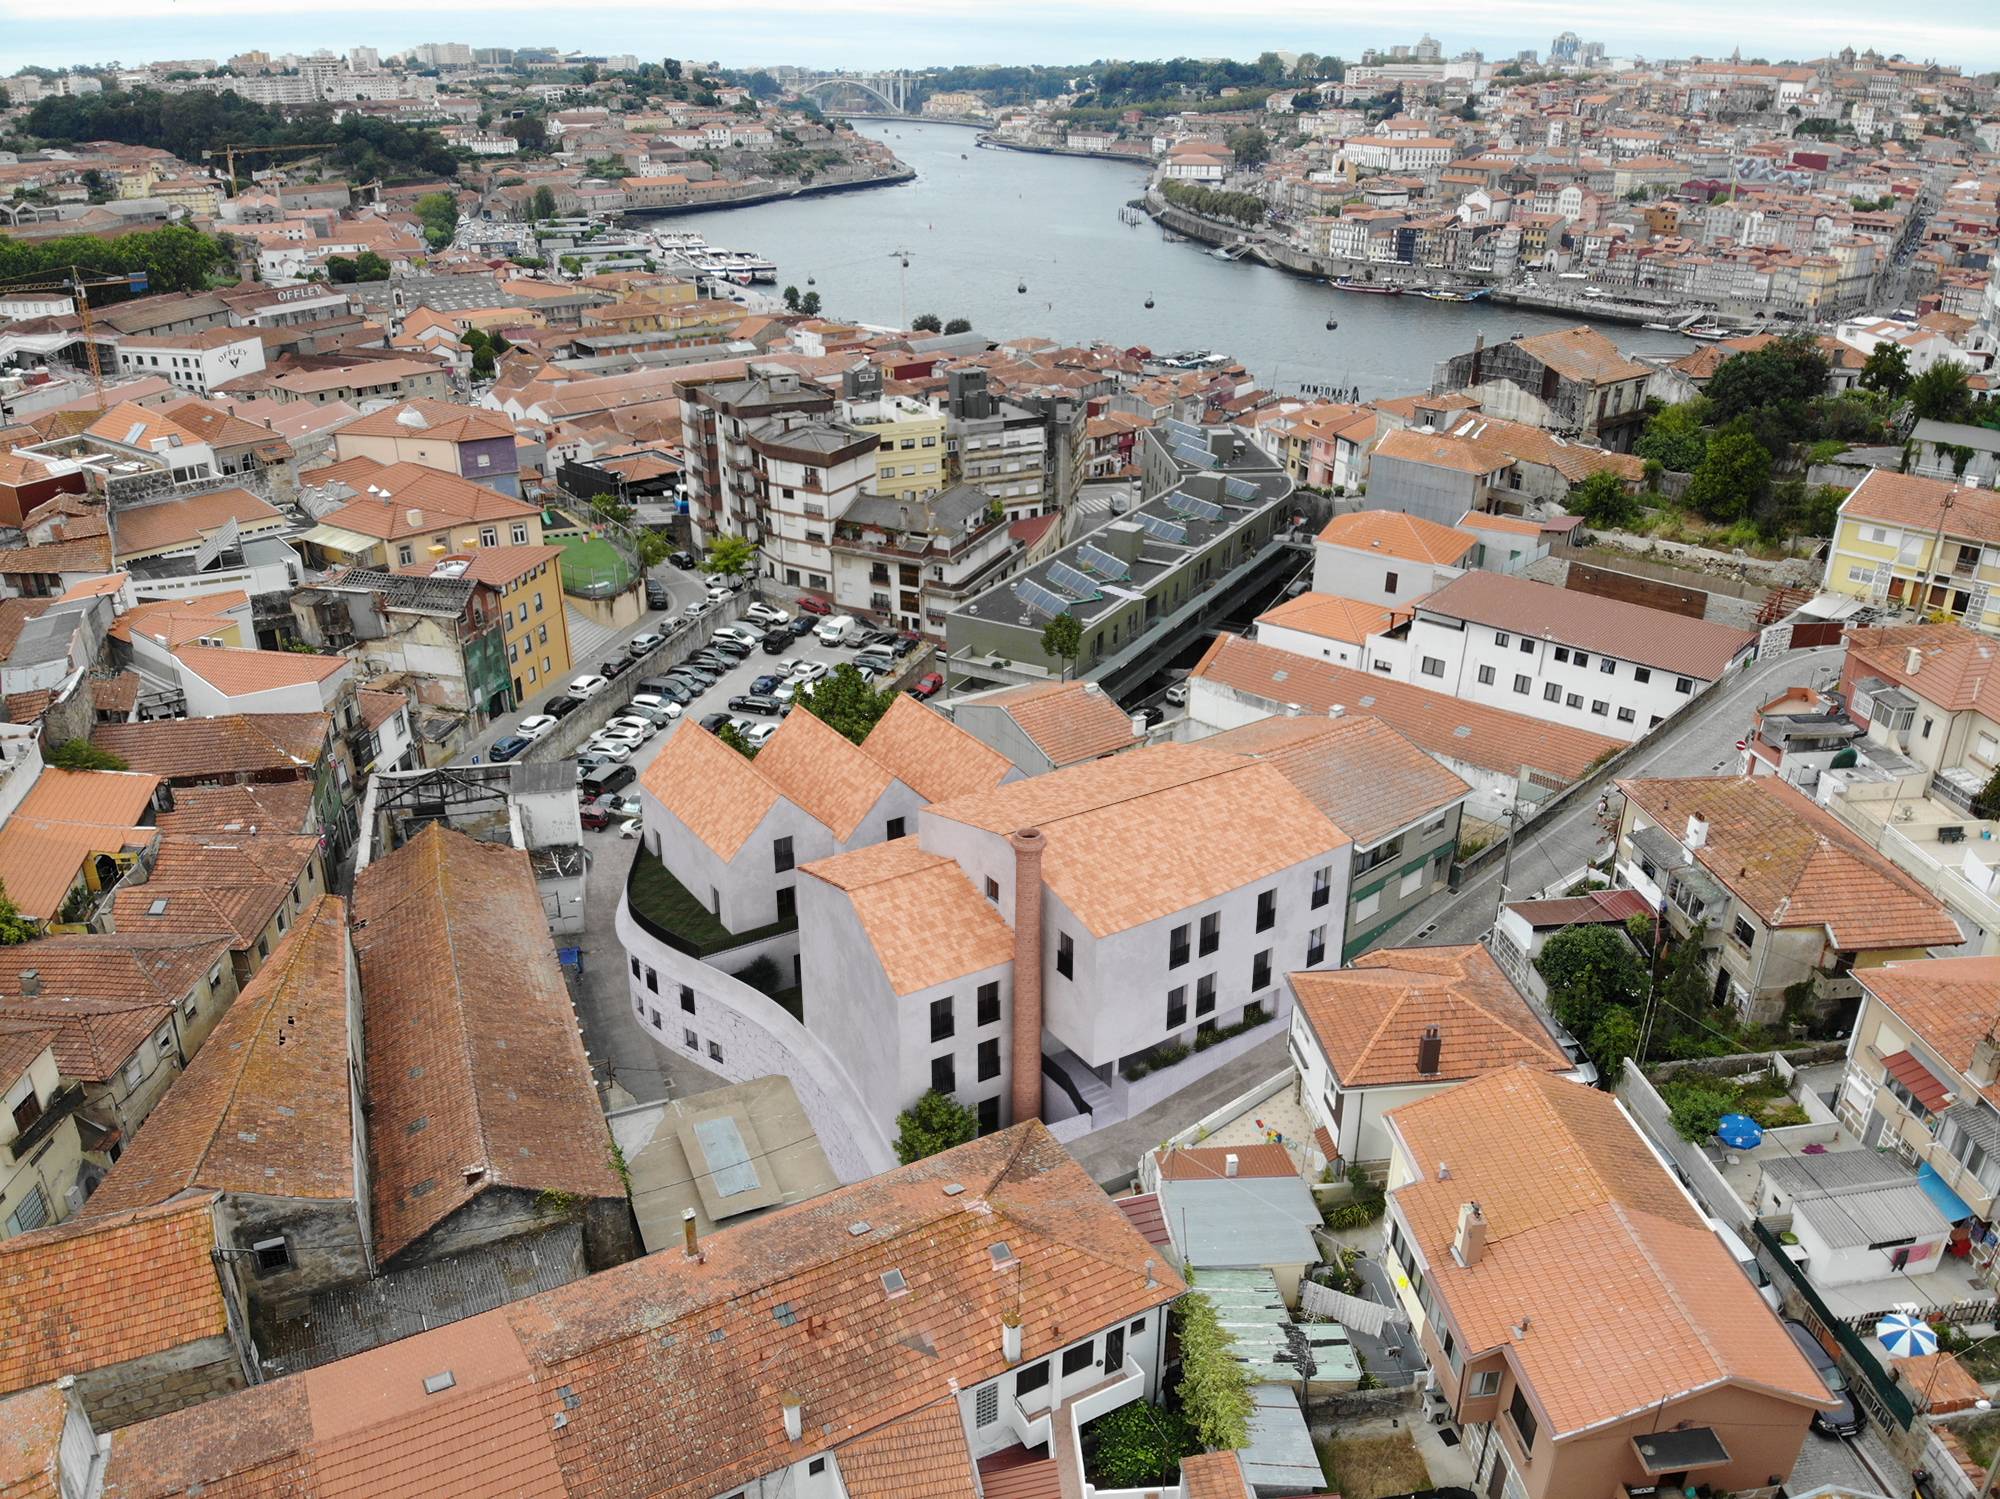 Exclusive 2 bedroom apartment - Residential apartment building in the historical part of Vila Nova de Gaia, Portugal